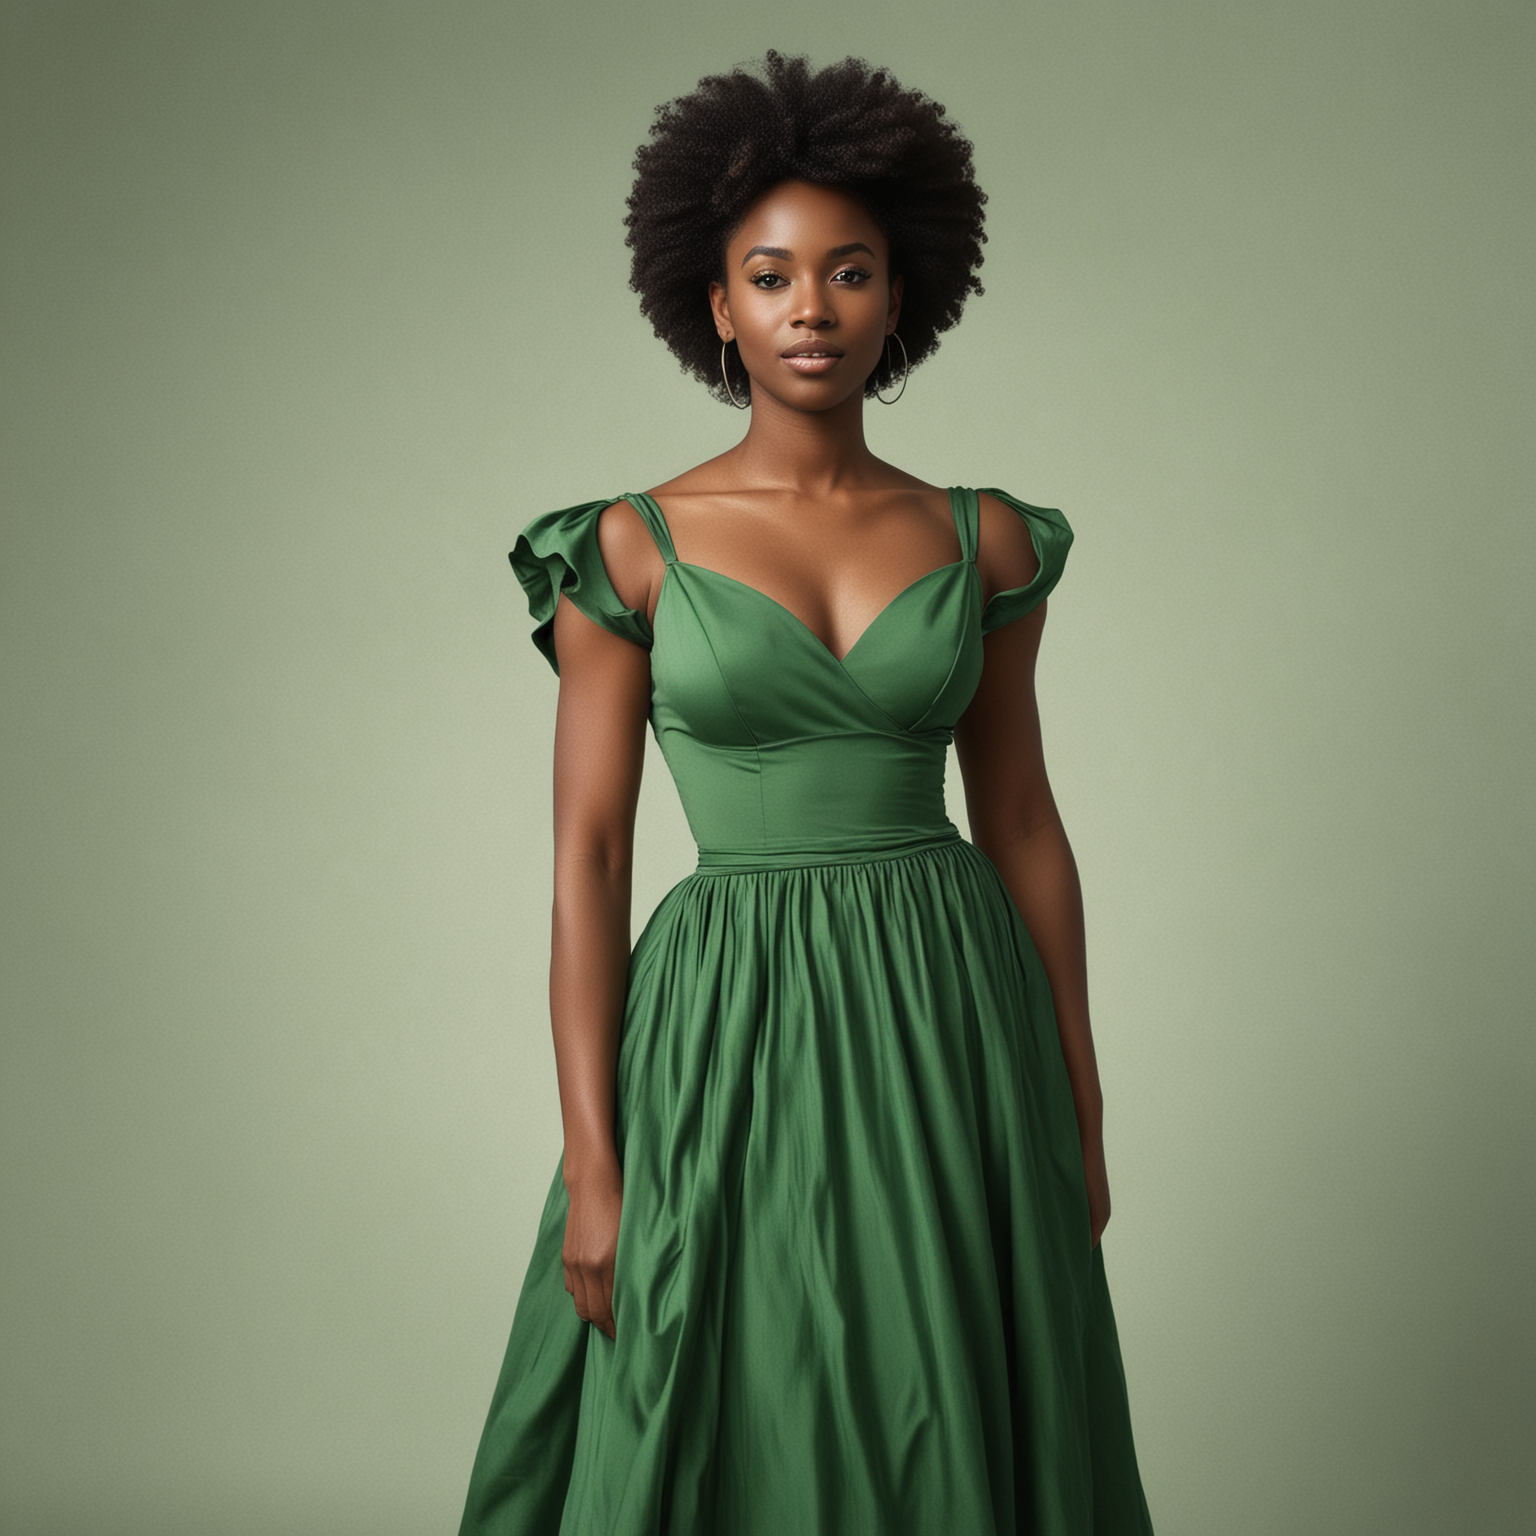 black woman in a green dress